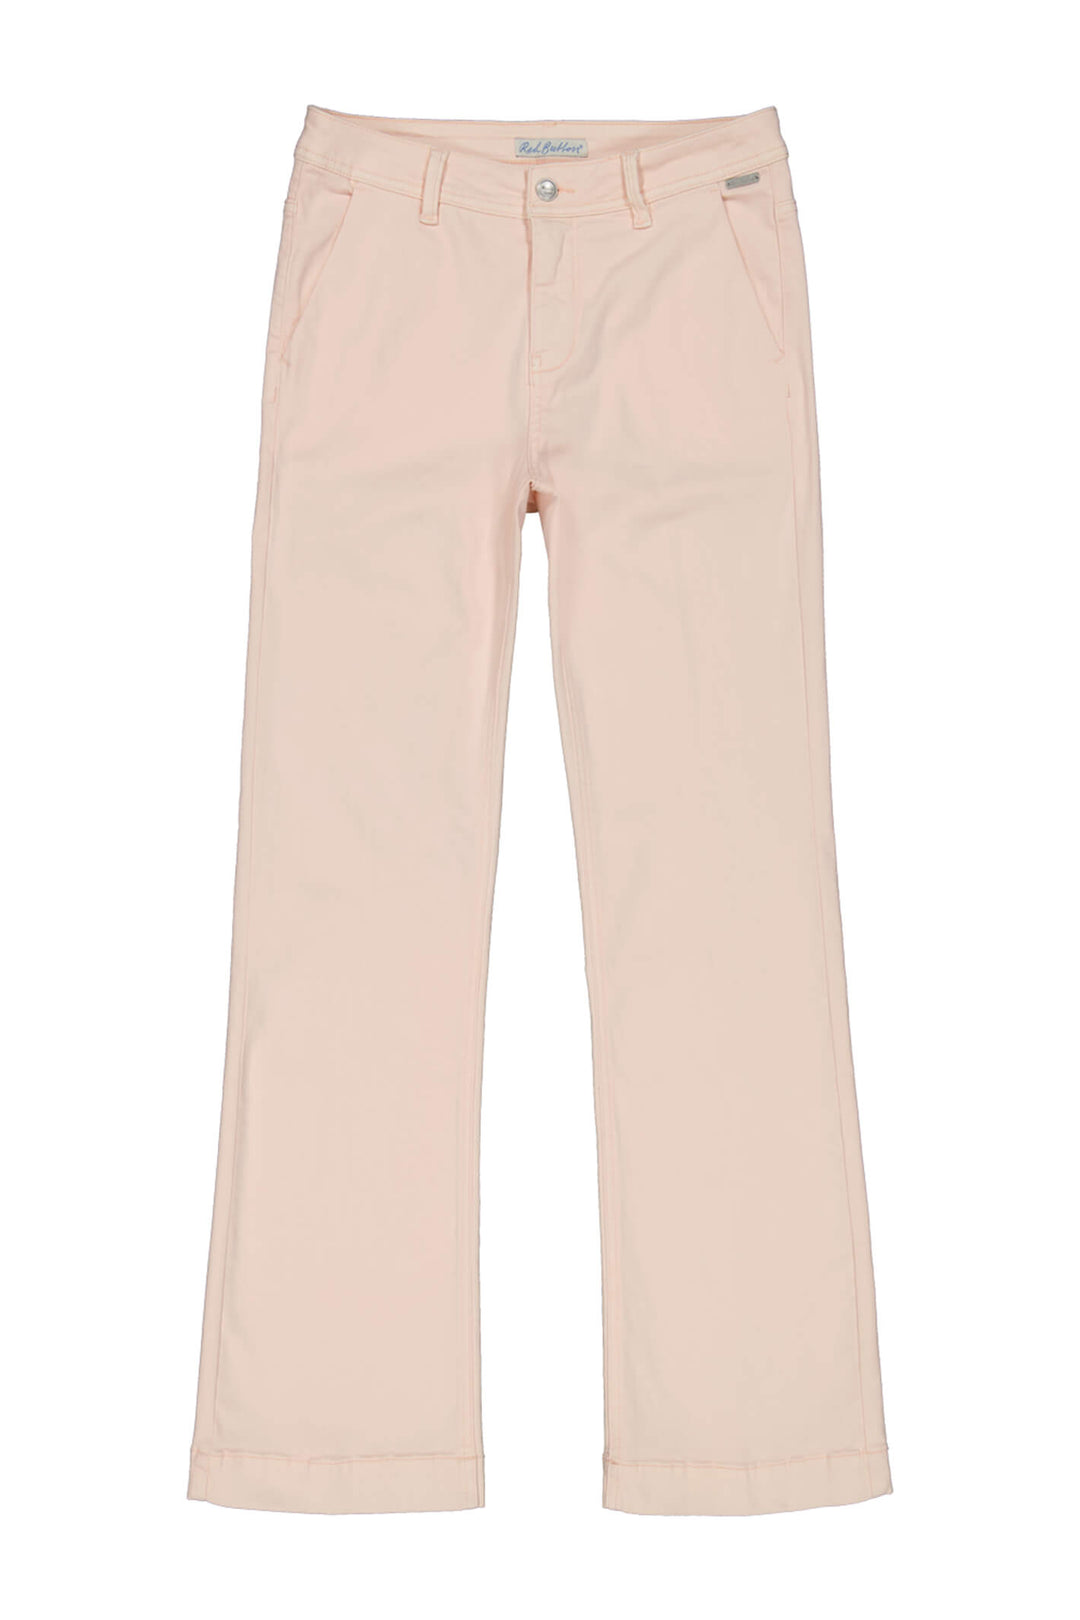 Red Button SRB3956A Bibetter Blush Pink Colour Inseam 72cm Trousers - Olivia Grace Fashion